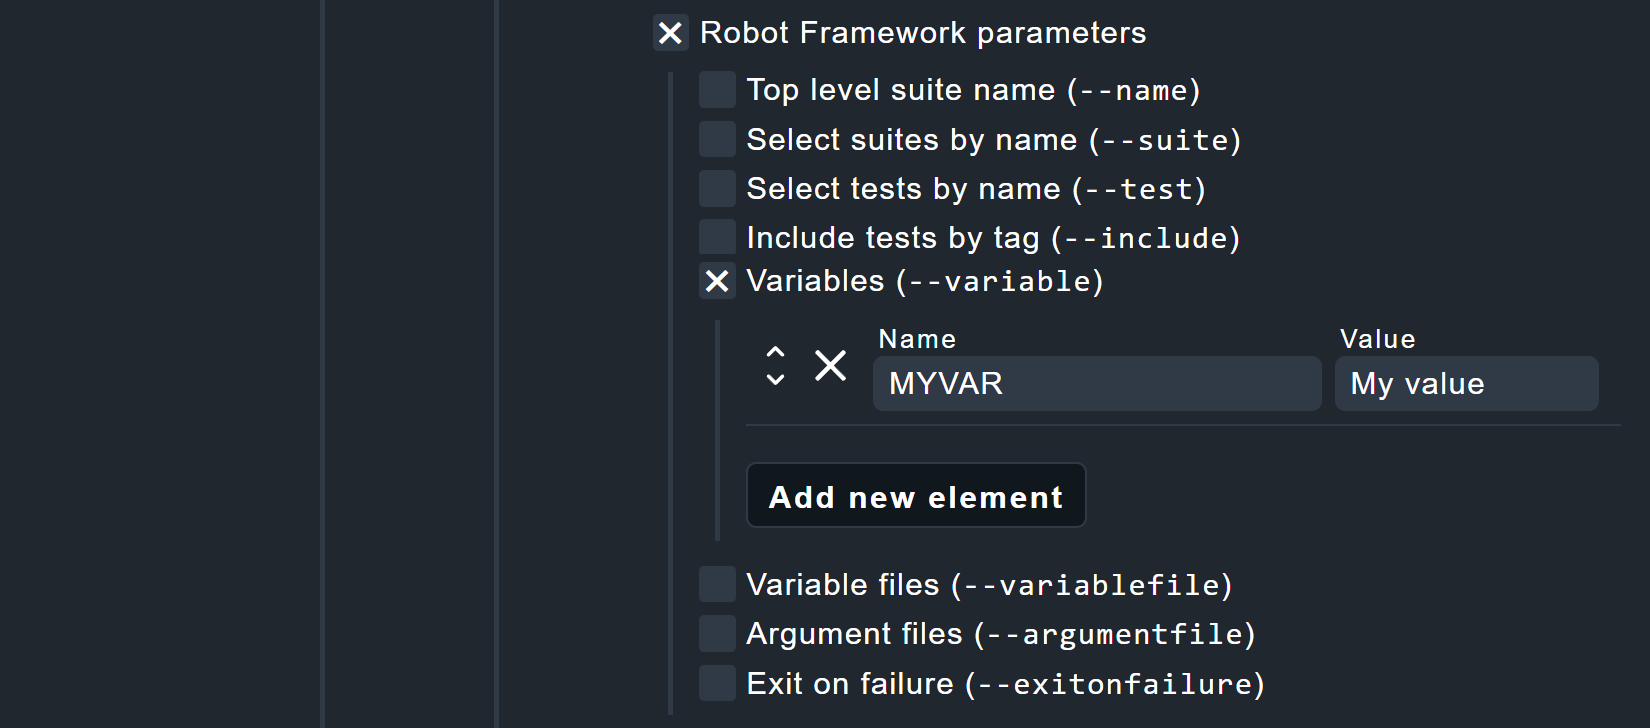 Command line parameters of Robot Framework.